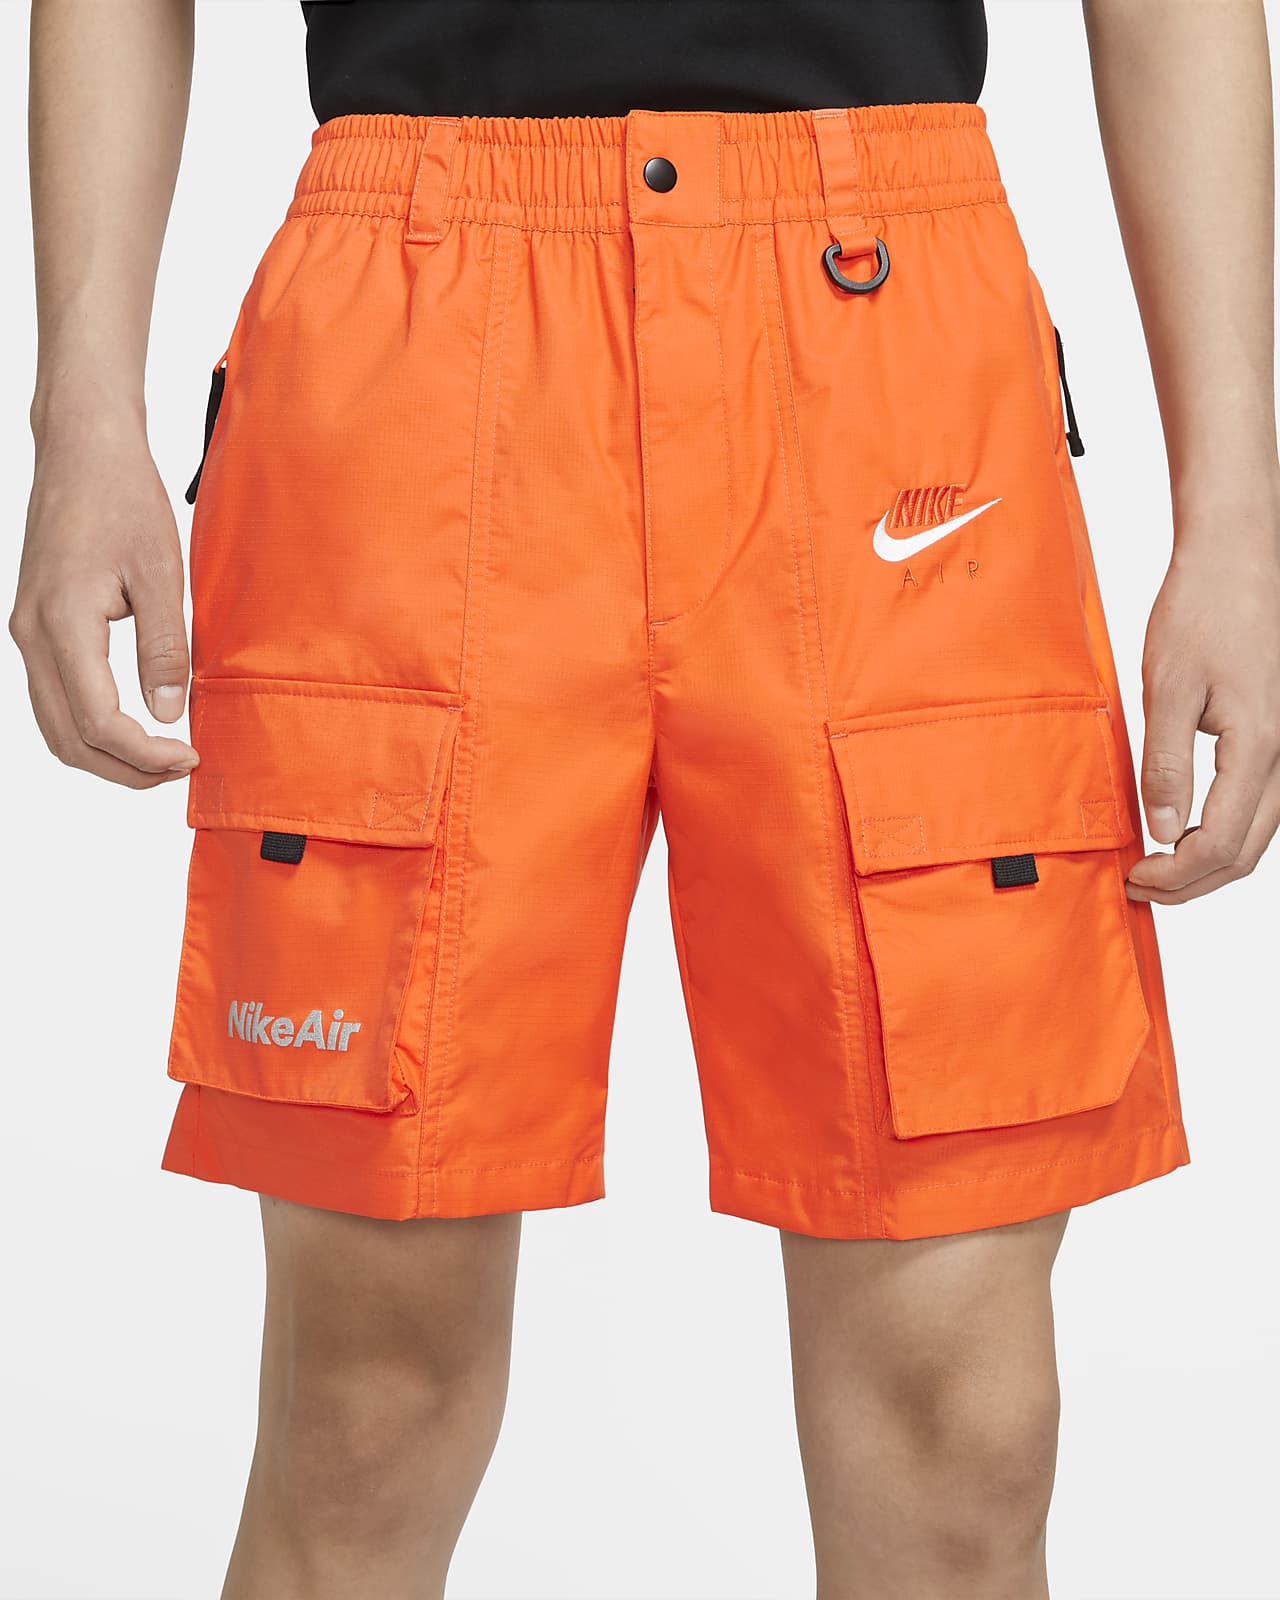 mens nike shorts with zip pockets